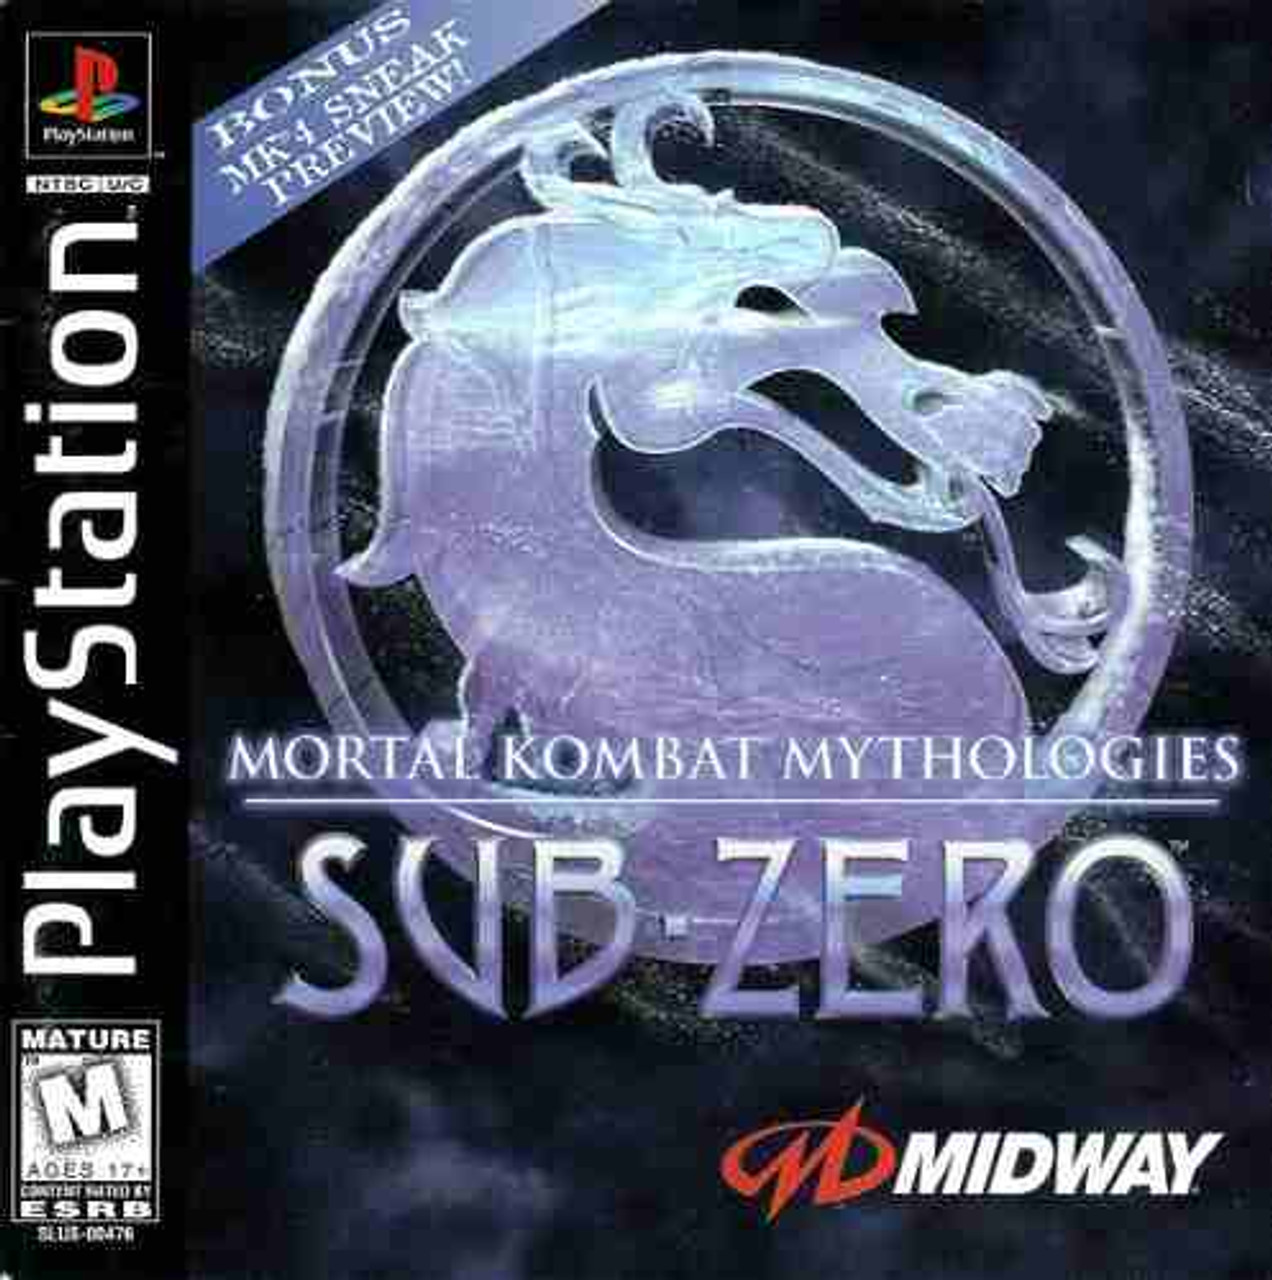 Unreleased (or not) Mortal Kombat 4 Dreamcast Reverse